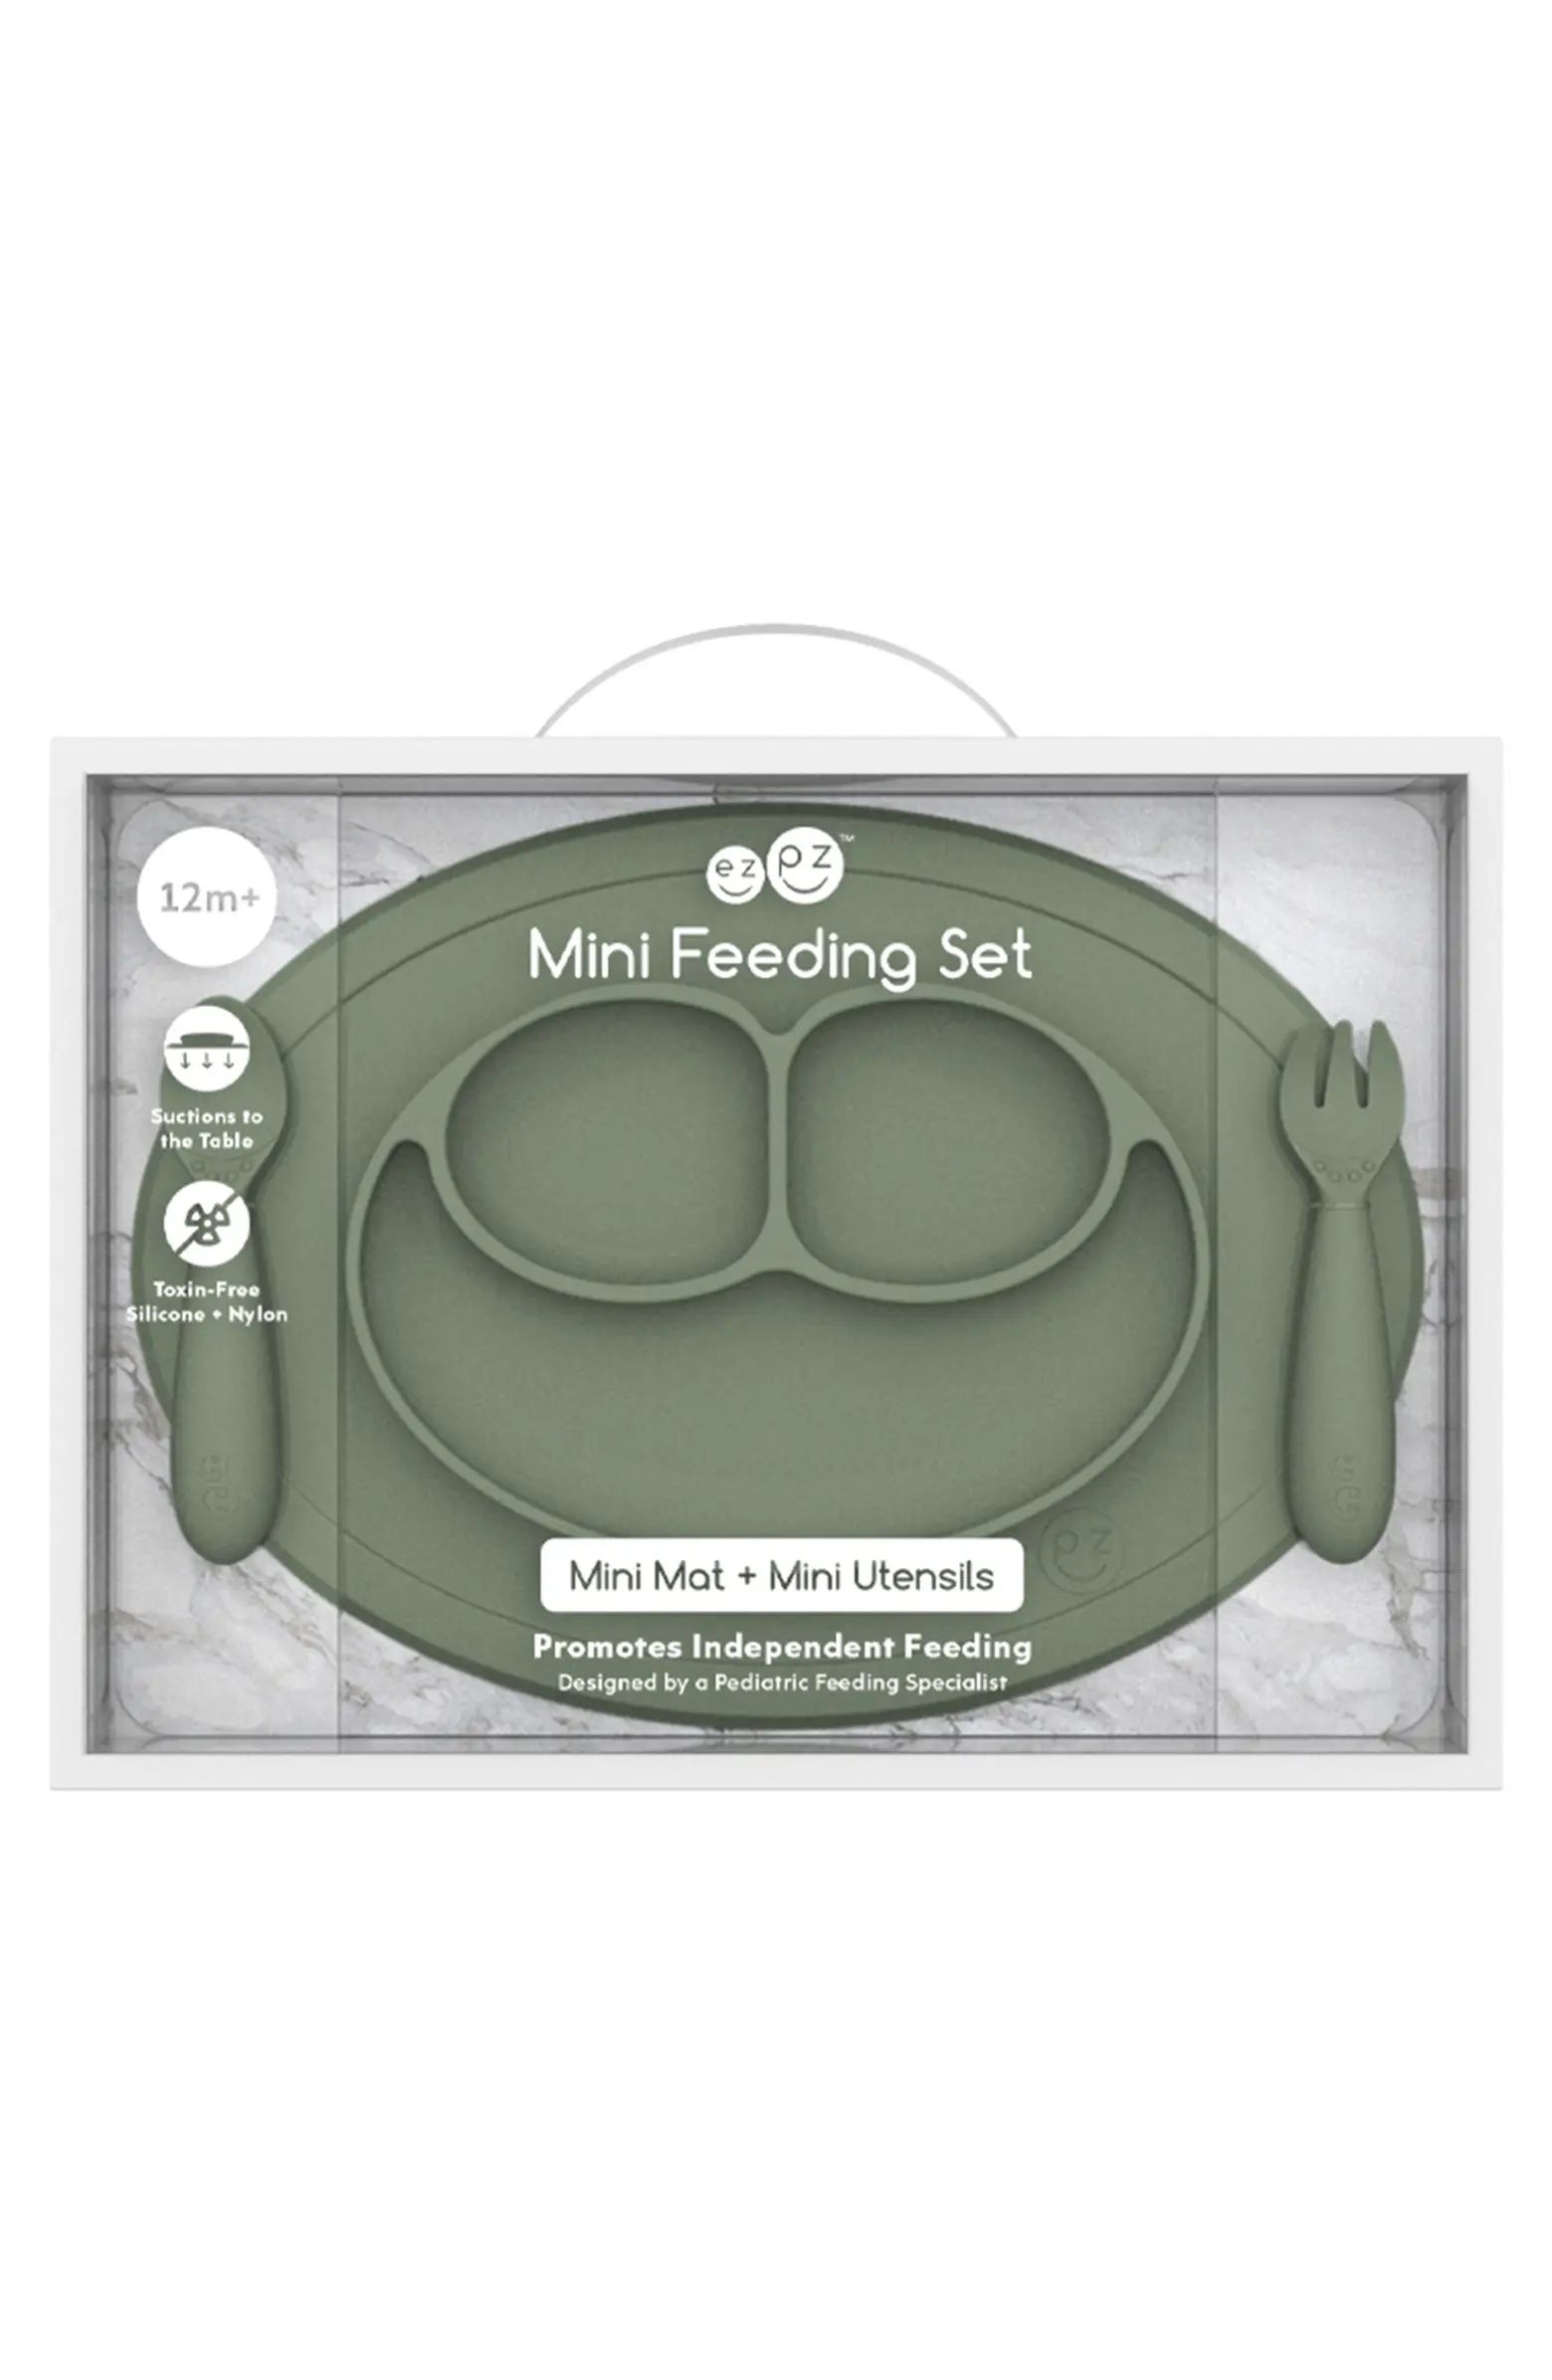 Mini Feeding Set | Nordstrom